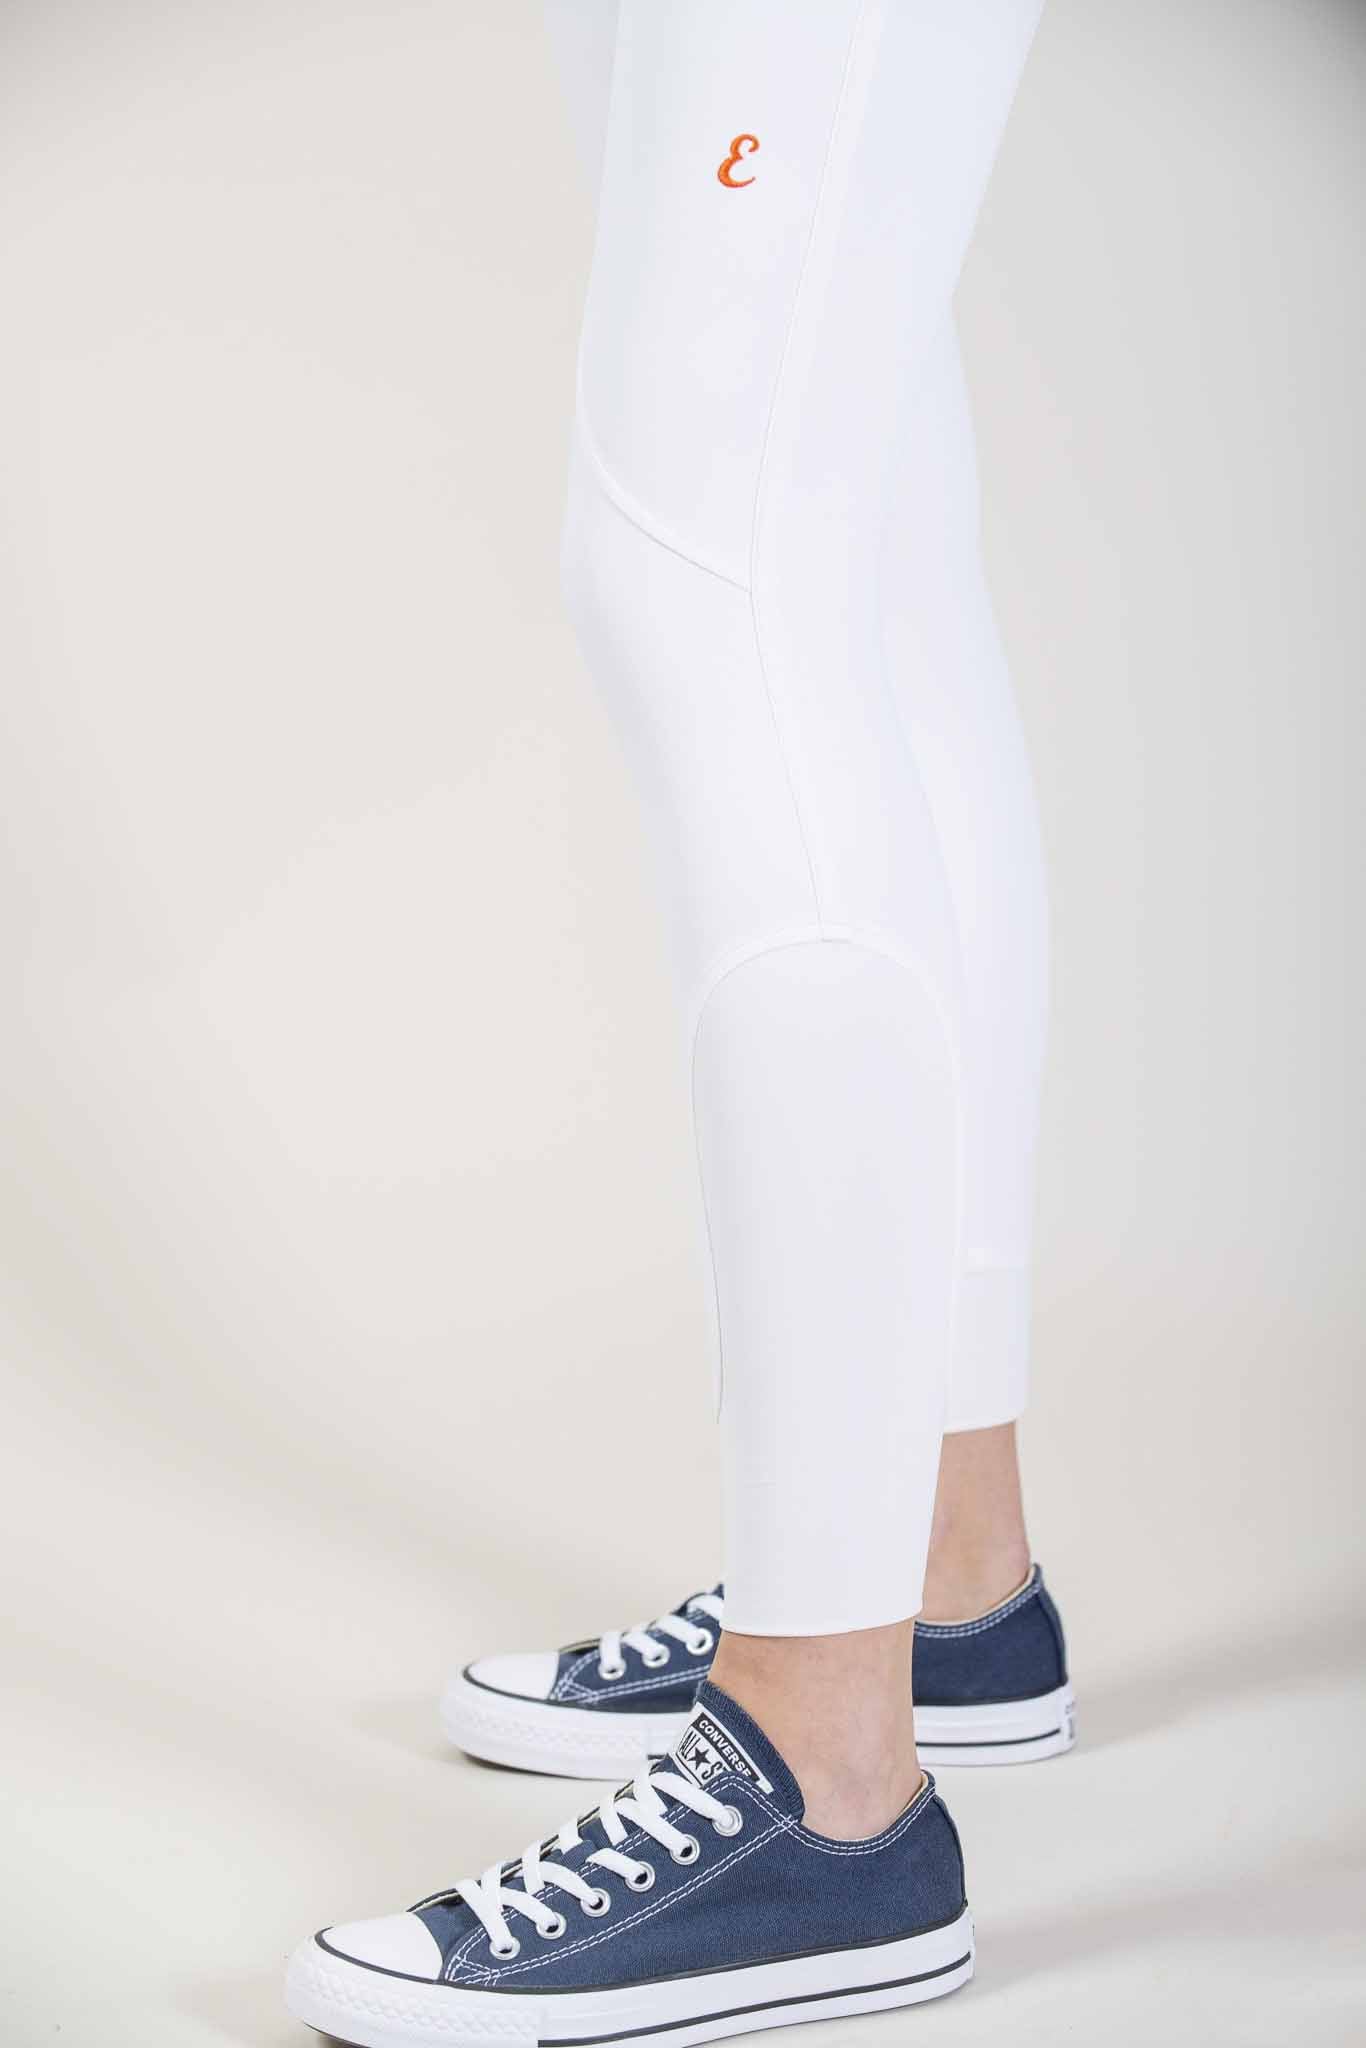 Pantalon d'équitation, Star Blanc II - Equial